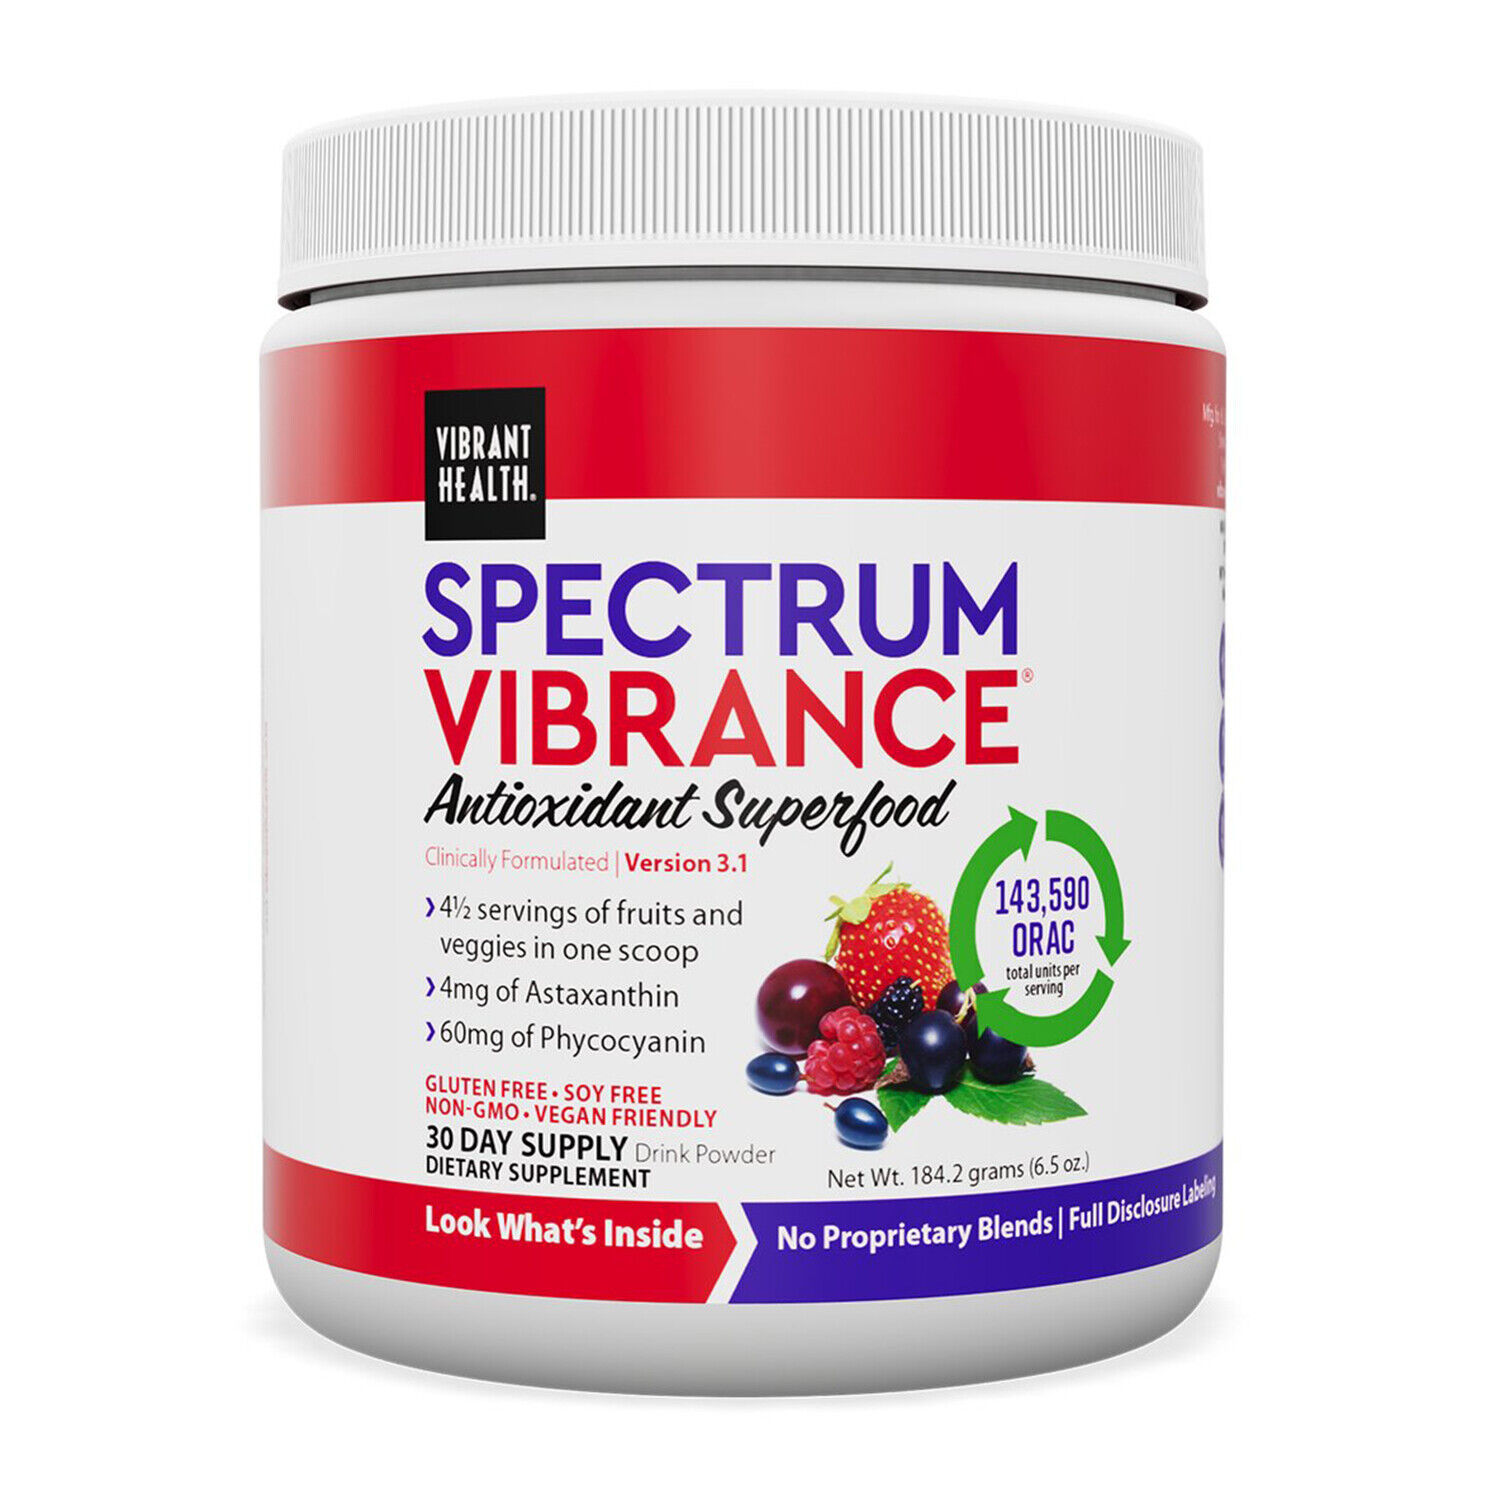 Vibrant Health Spectrum Vibrance Antioxidant Superfood, 6.5 Ounces - $47.20